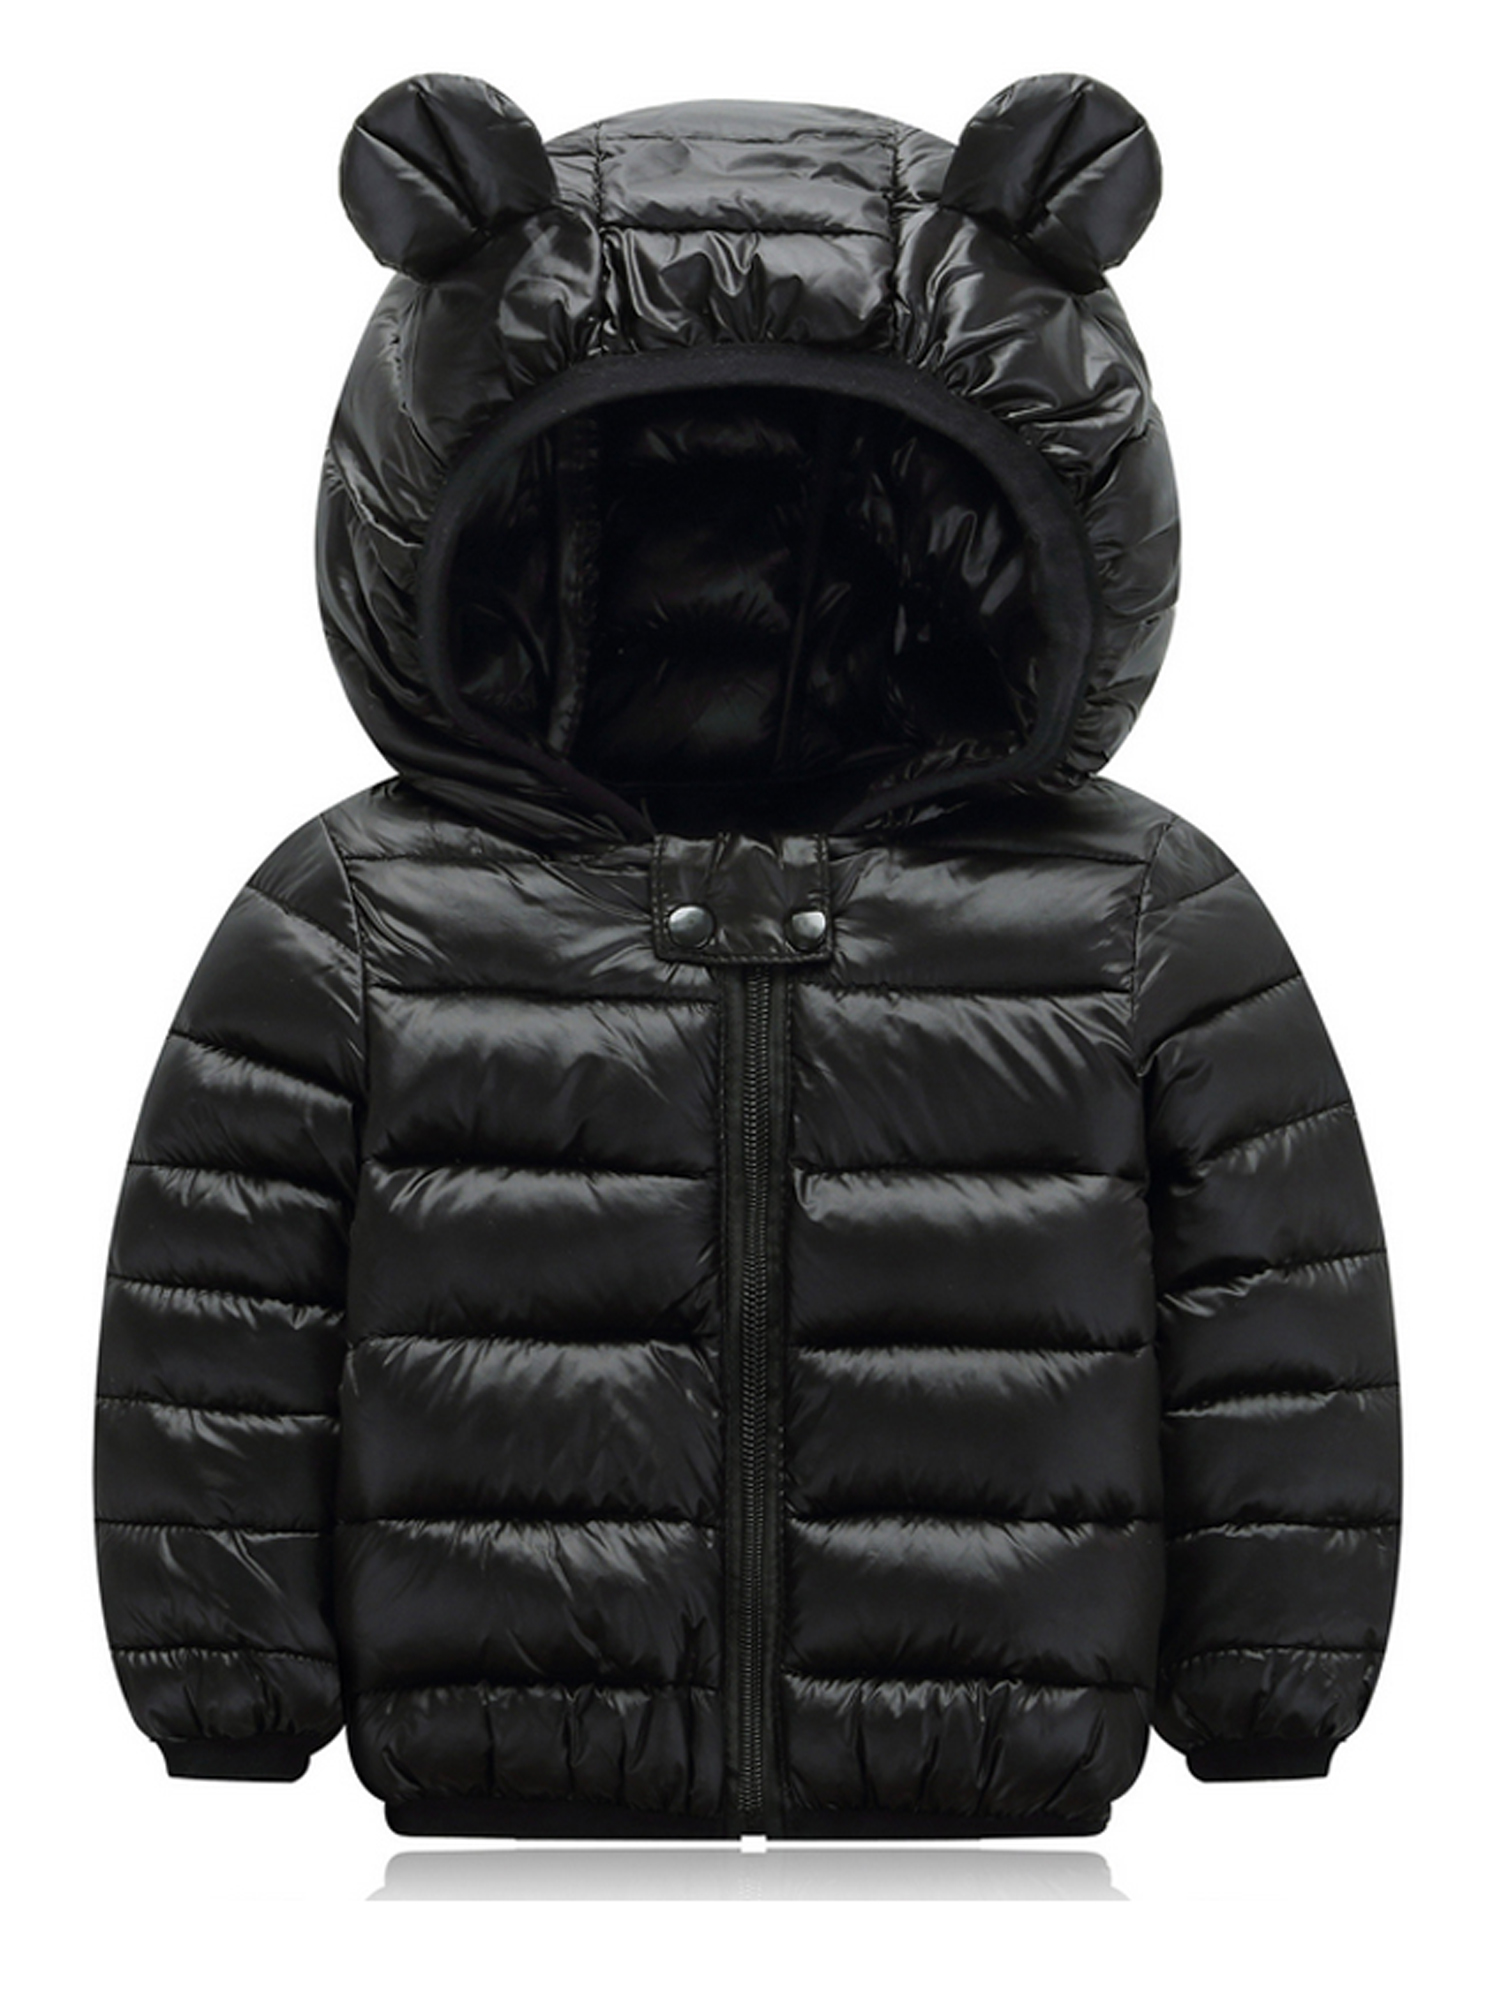 Toddler Baby Hooded Down Jacket Boys Girls Kids Thicken Warm Winter Coat Outerwear 1-7t